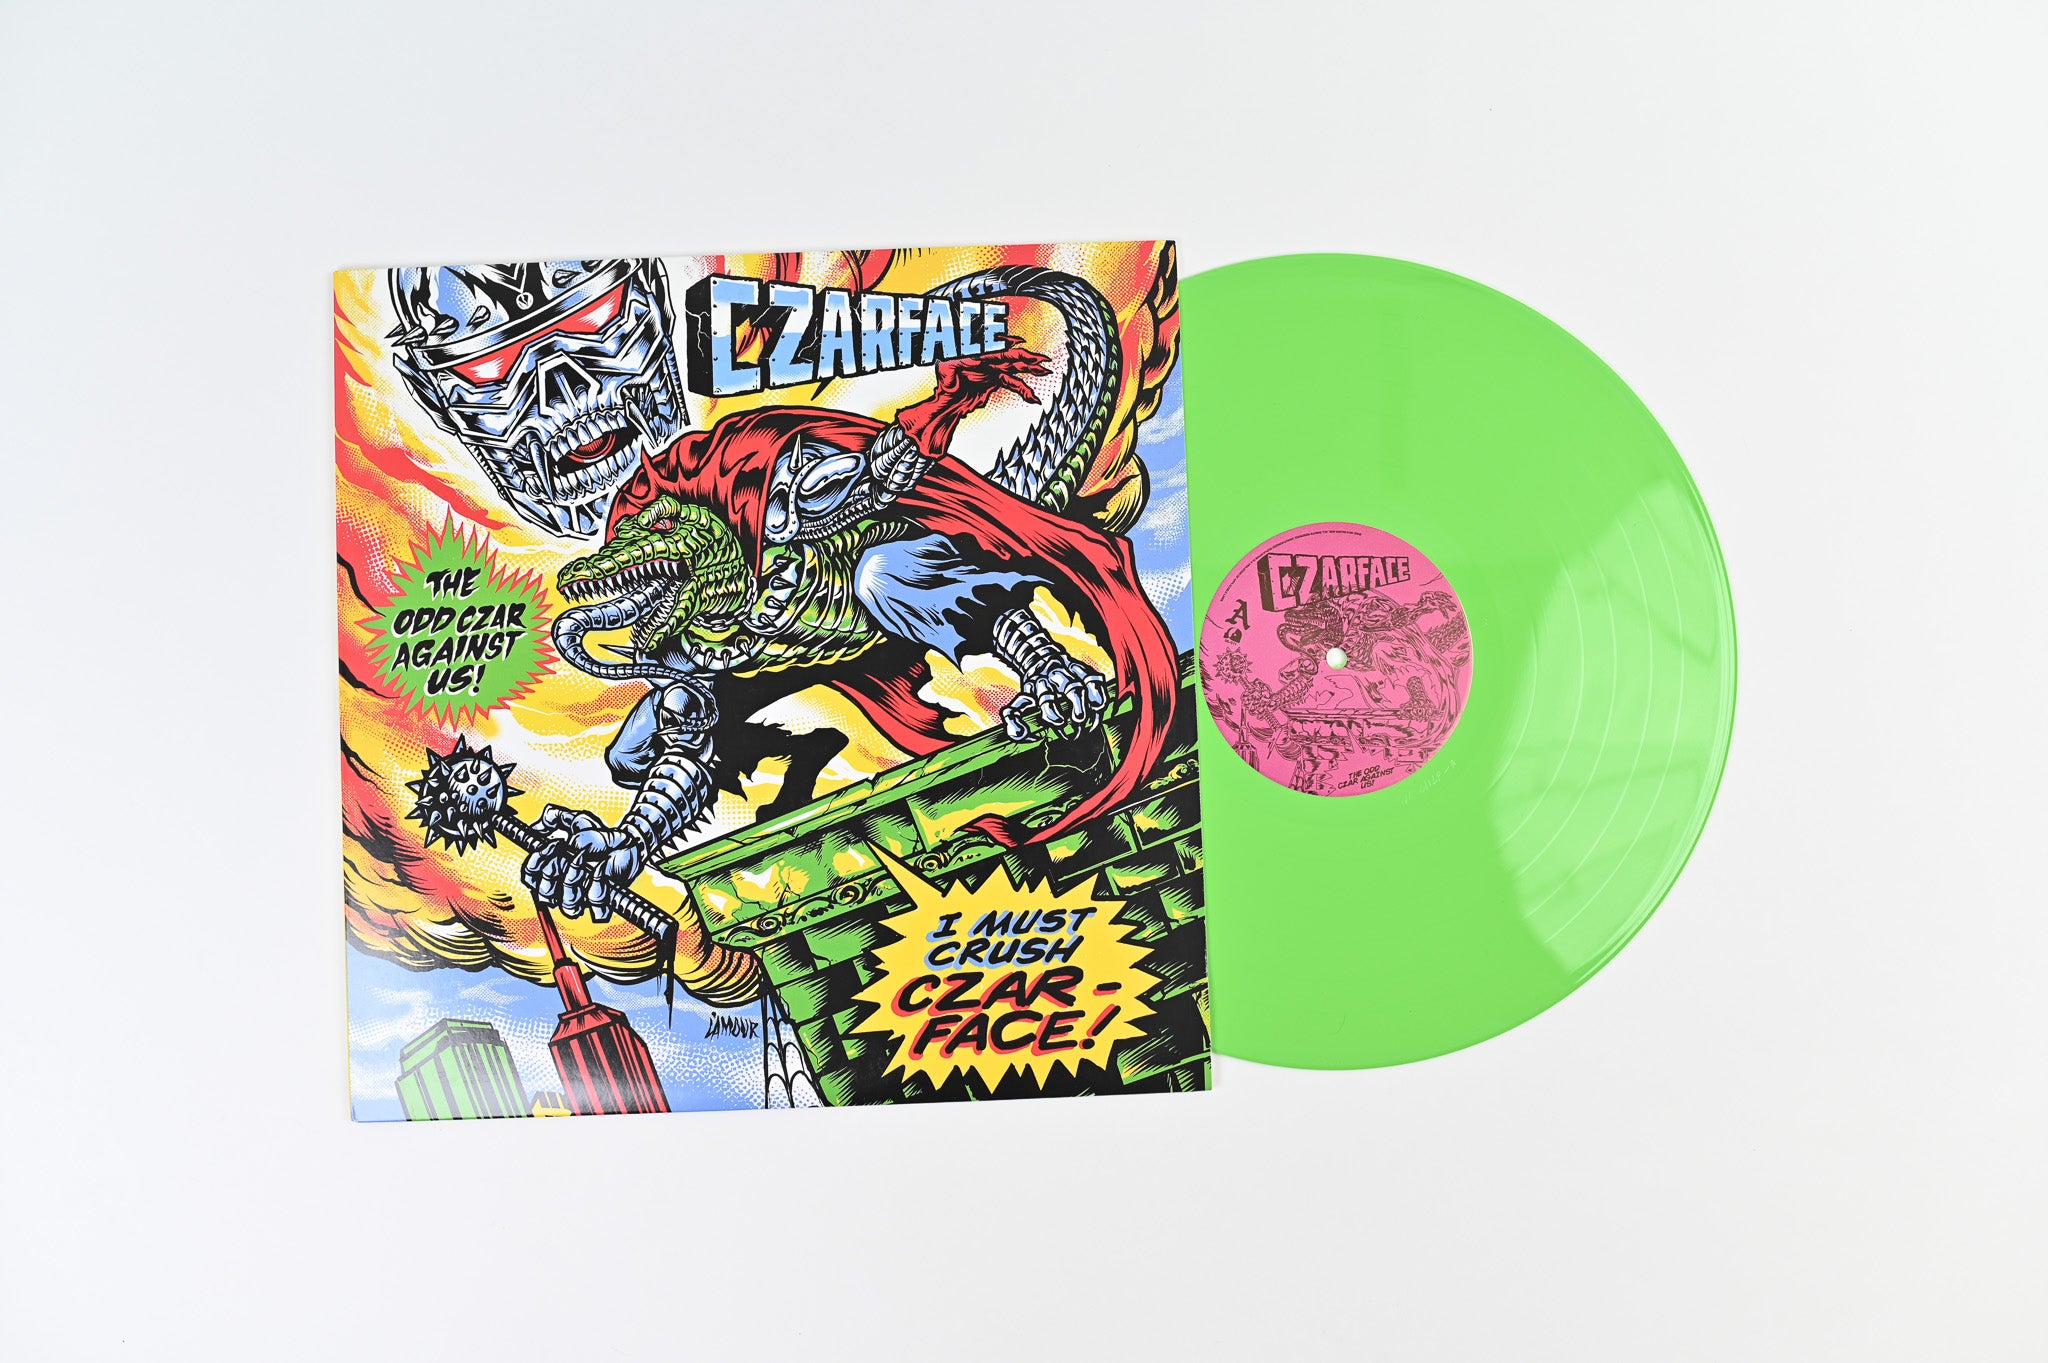 Czarface - The Odd Czar Against Us! on Silver Age Limited Green Vinyl